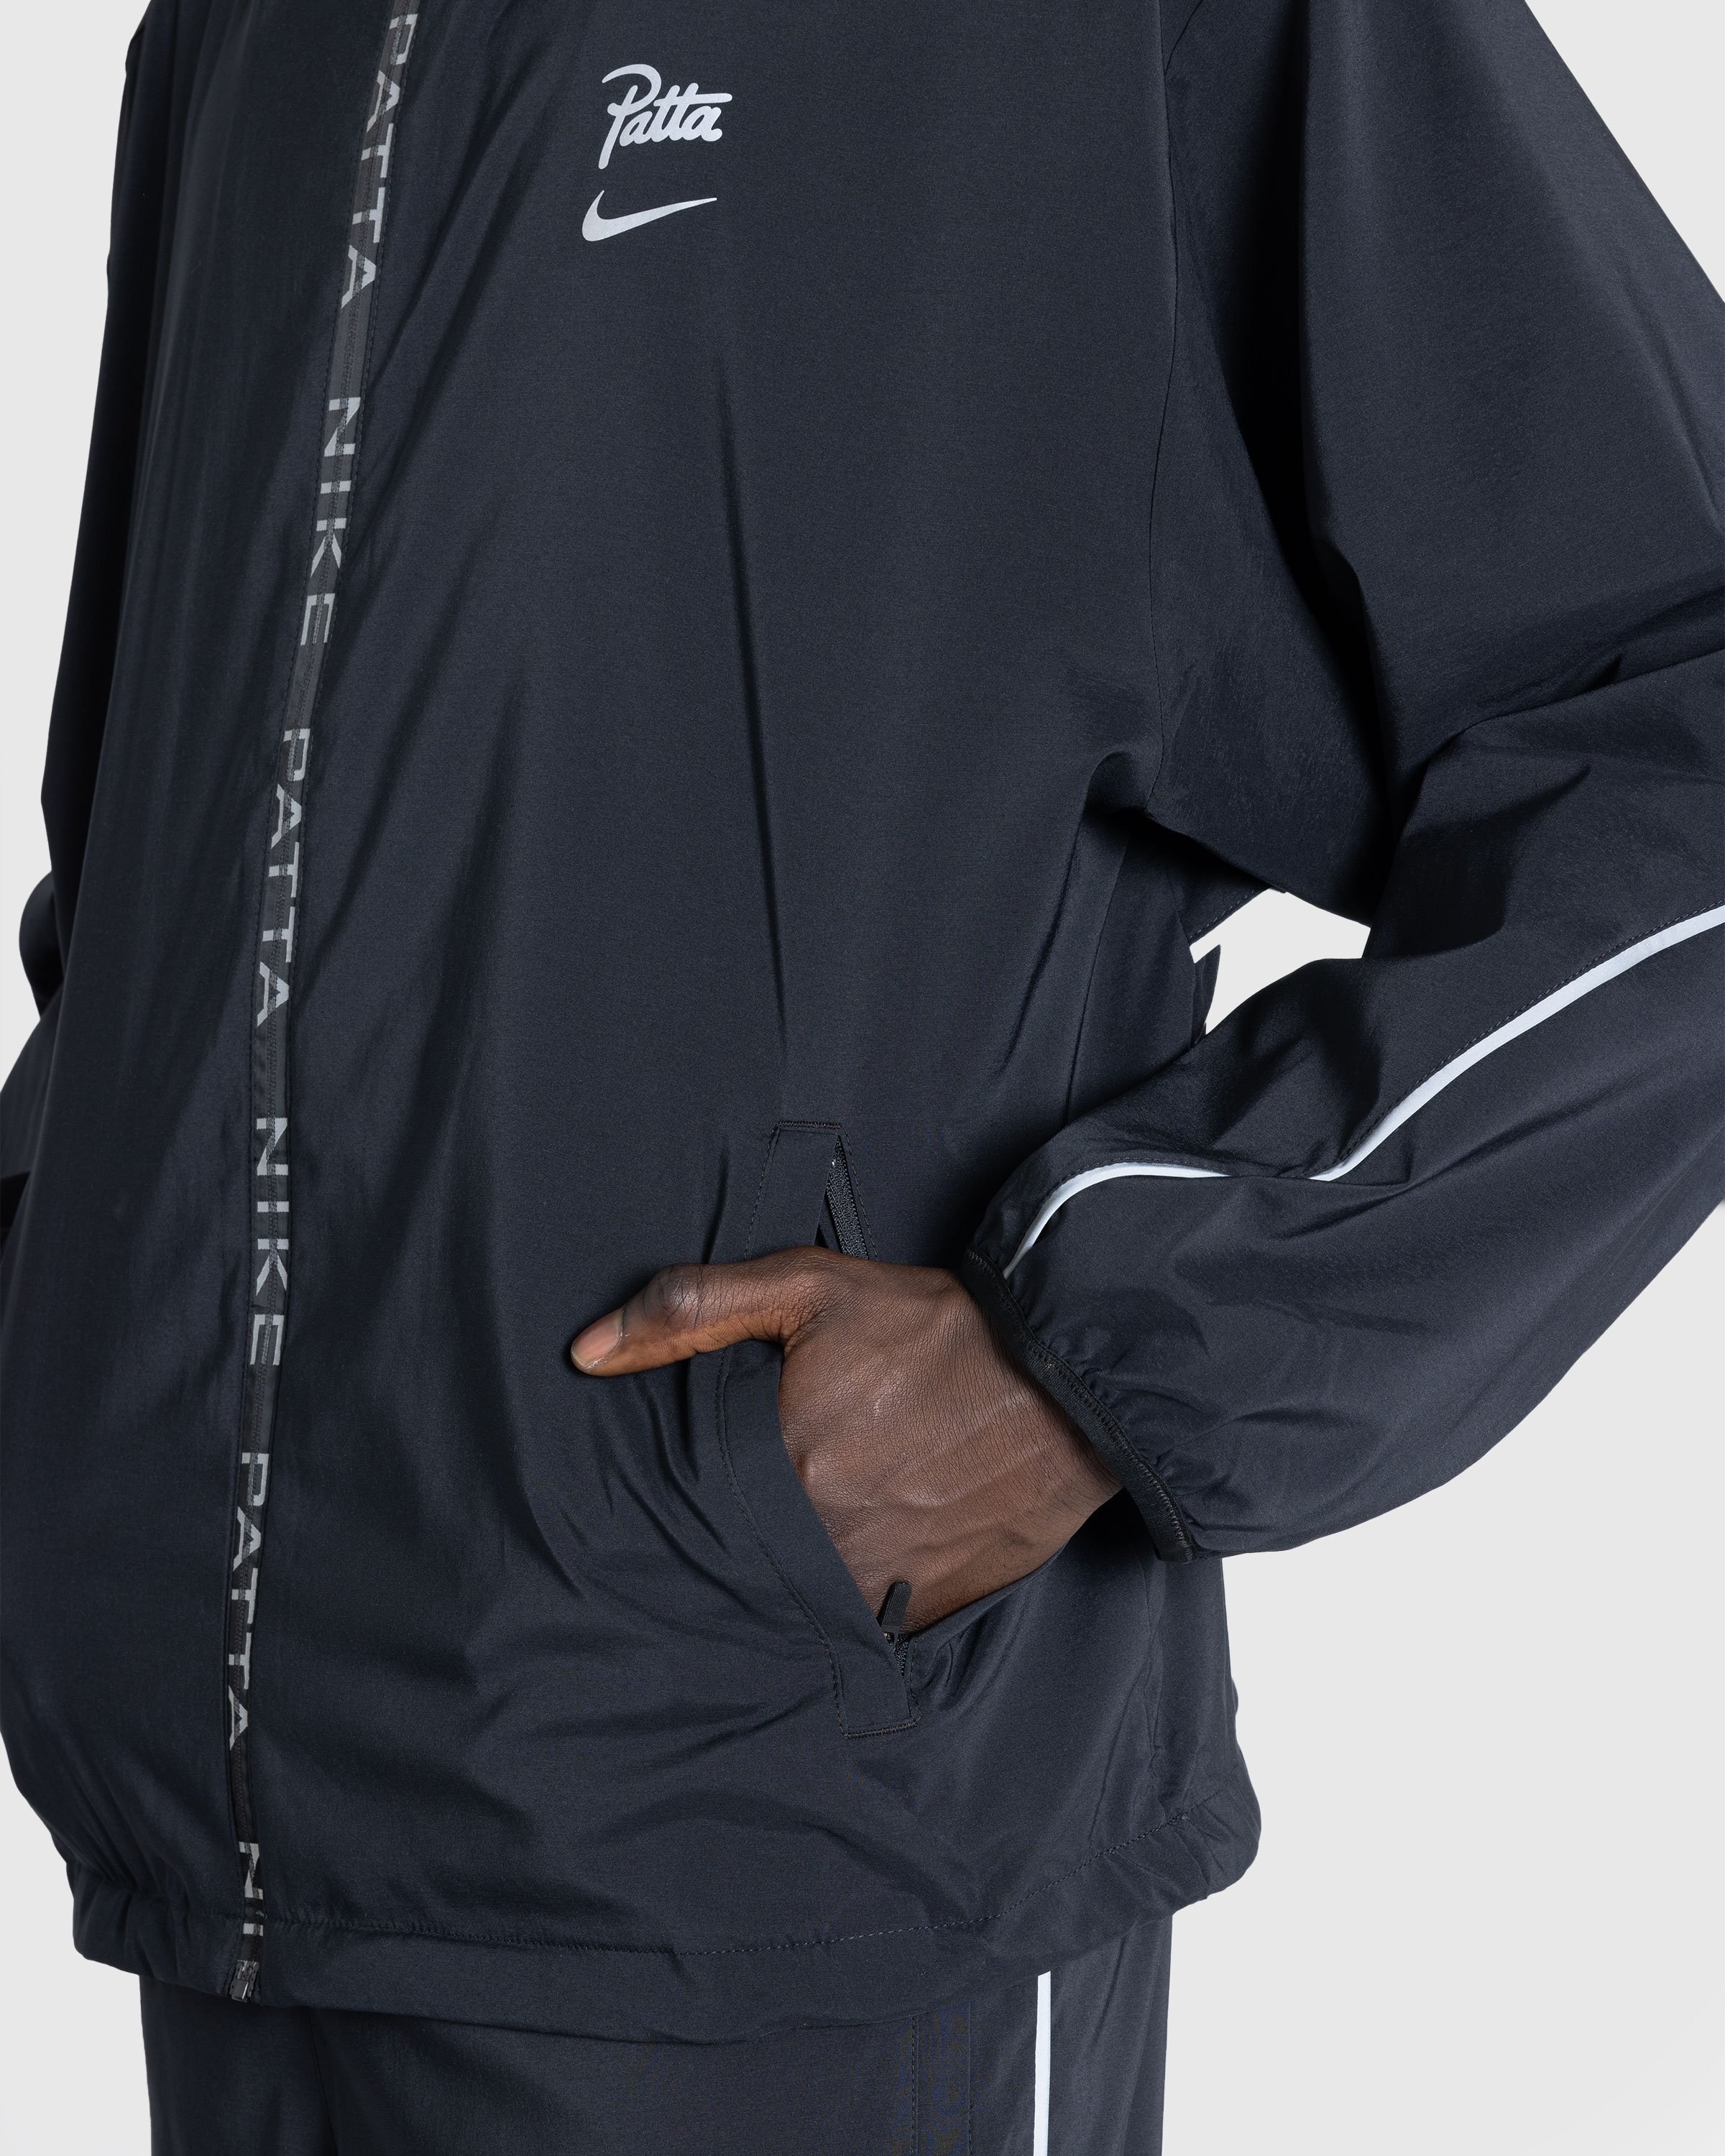 Nike x Patta – Men's Full-Zip Jacket Black - Jackets - Black - Image 5